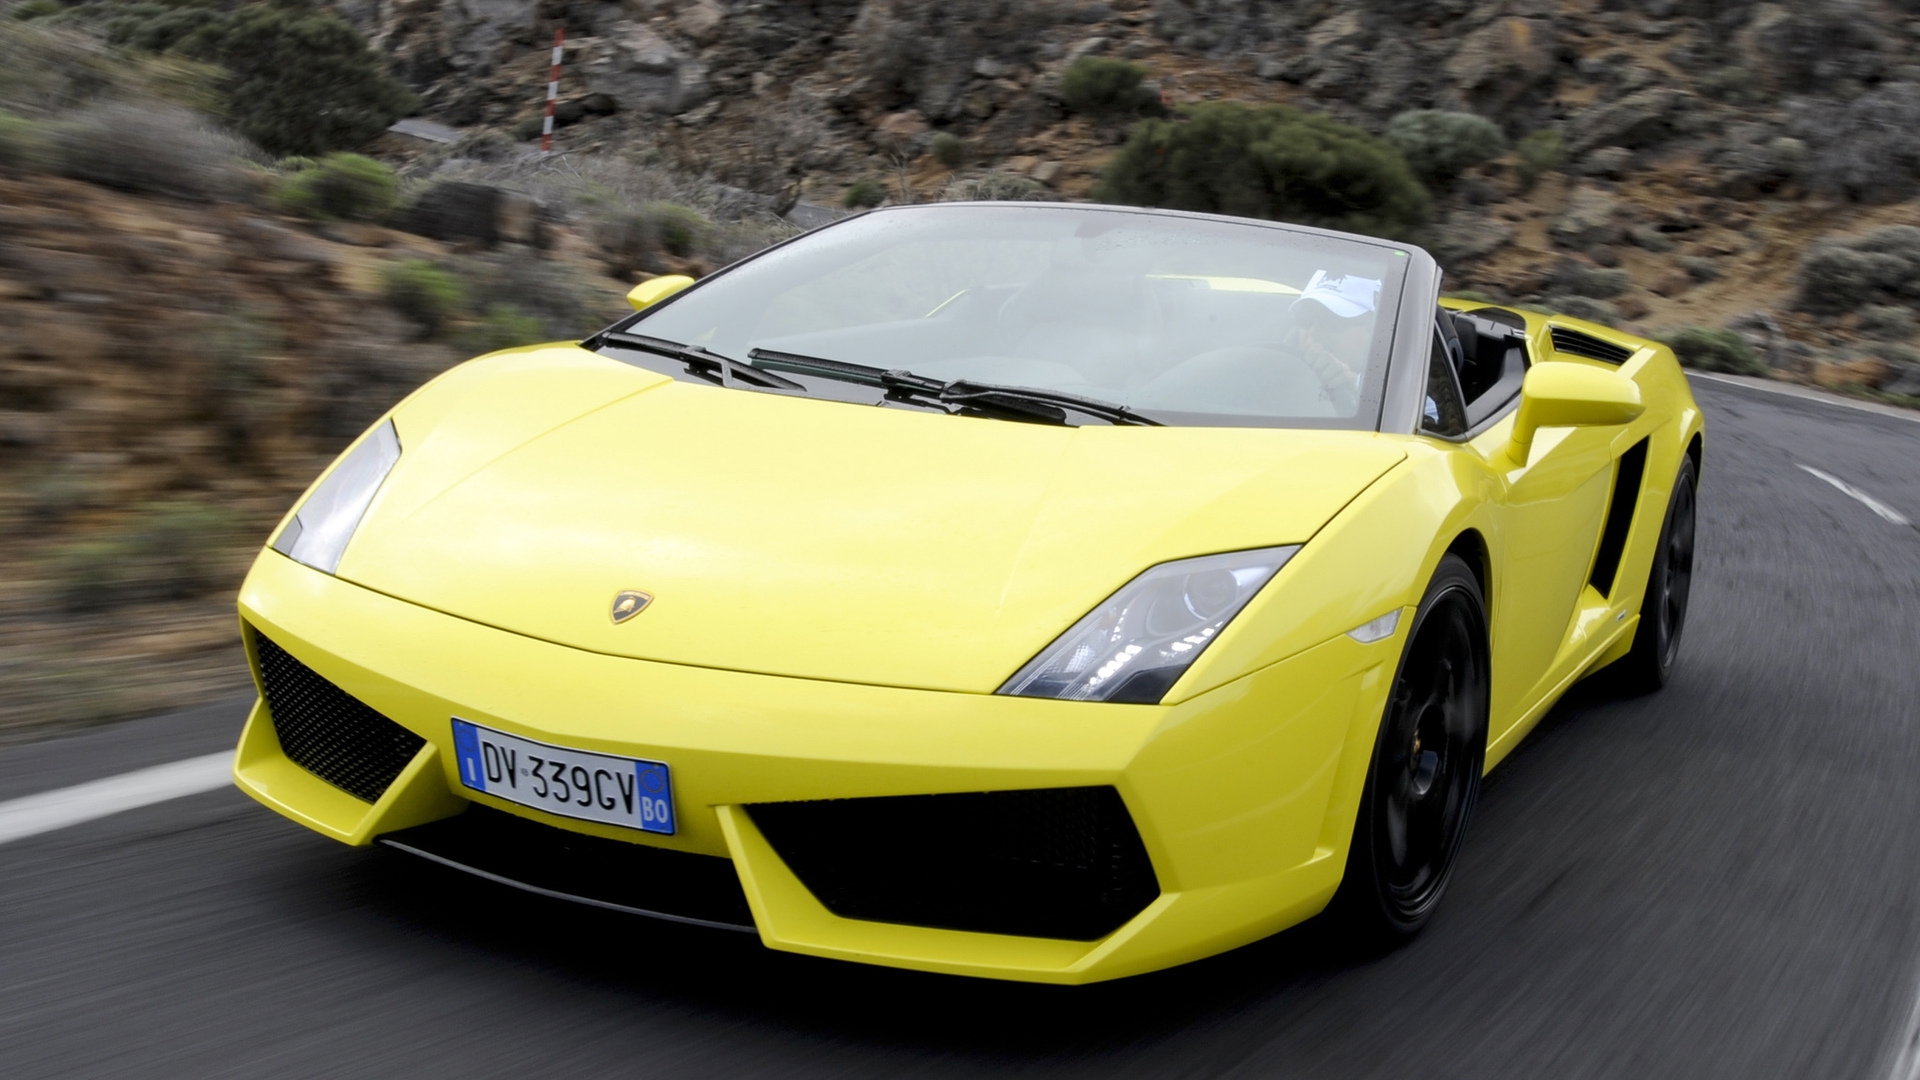 Yellow Lamborghini Gallardo LP560 4 Spyder  for 1920 x 1080 HDTV 1080p resolution